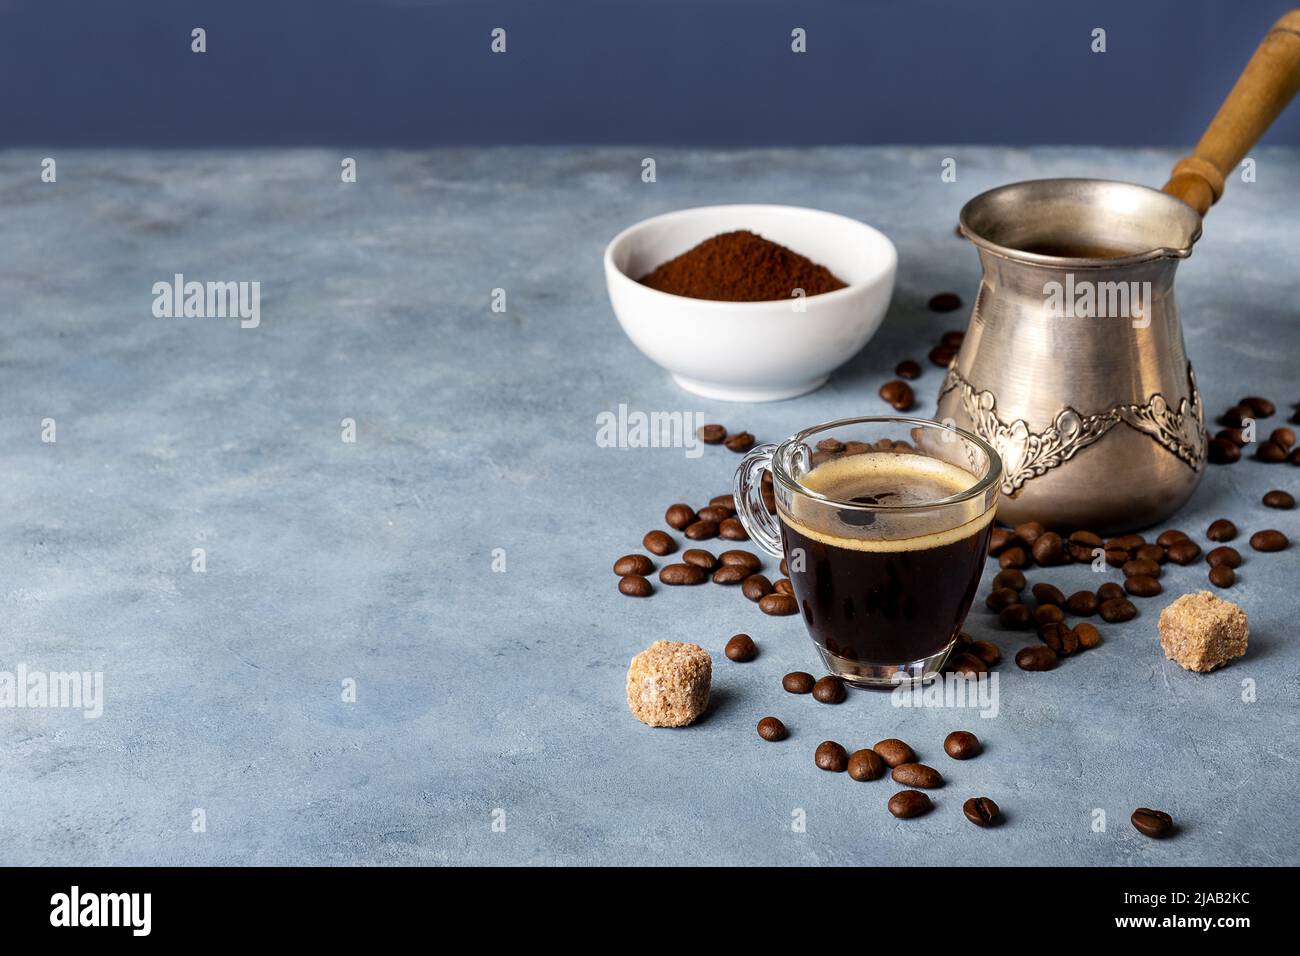 https://c8.alamy.com/comp/2JAB2KC/turkish-coffee-maker-glass-cup-ground-coffee-and-coffee-beans-2JAB2KC.jpg